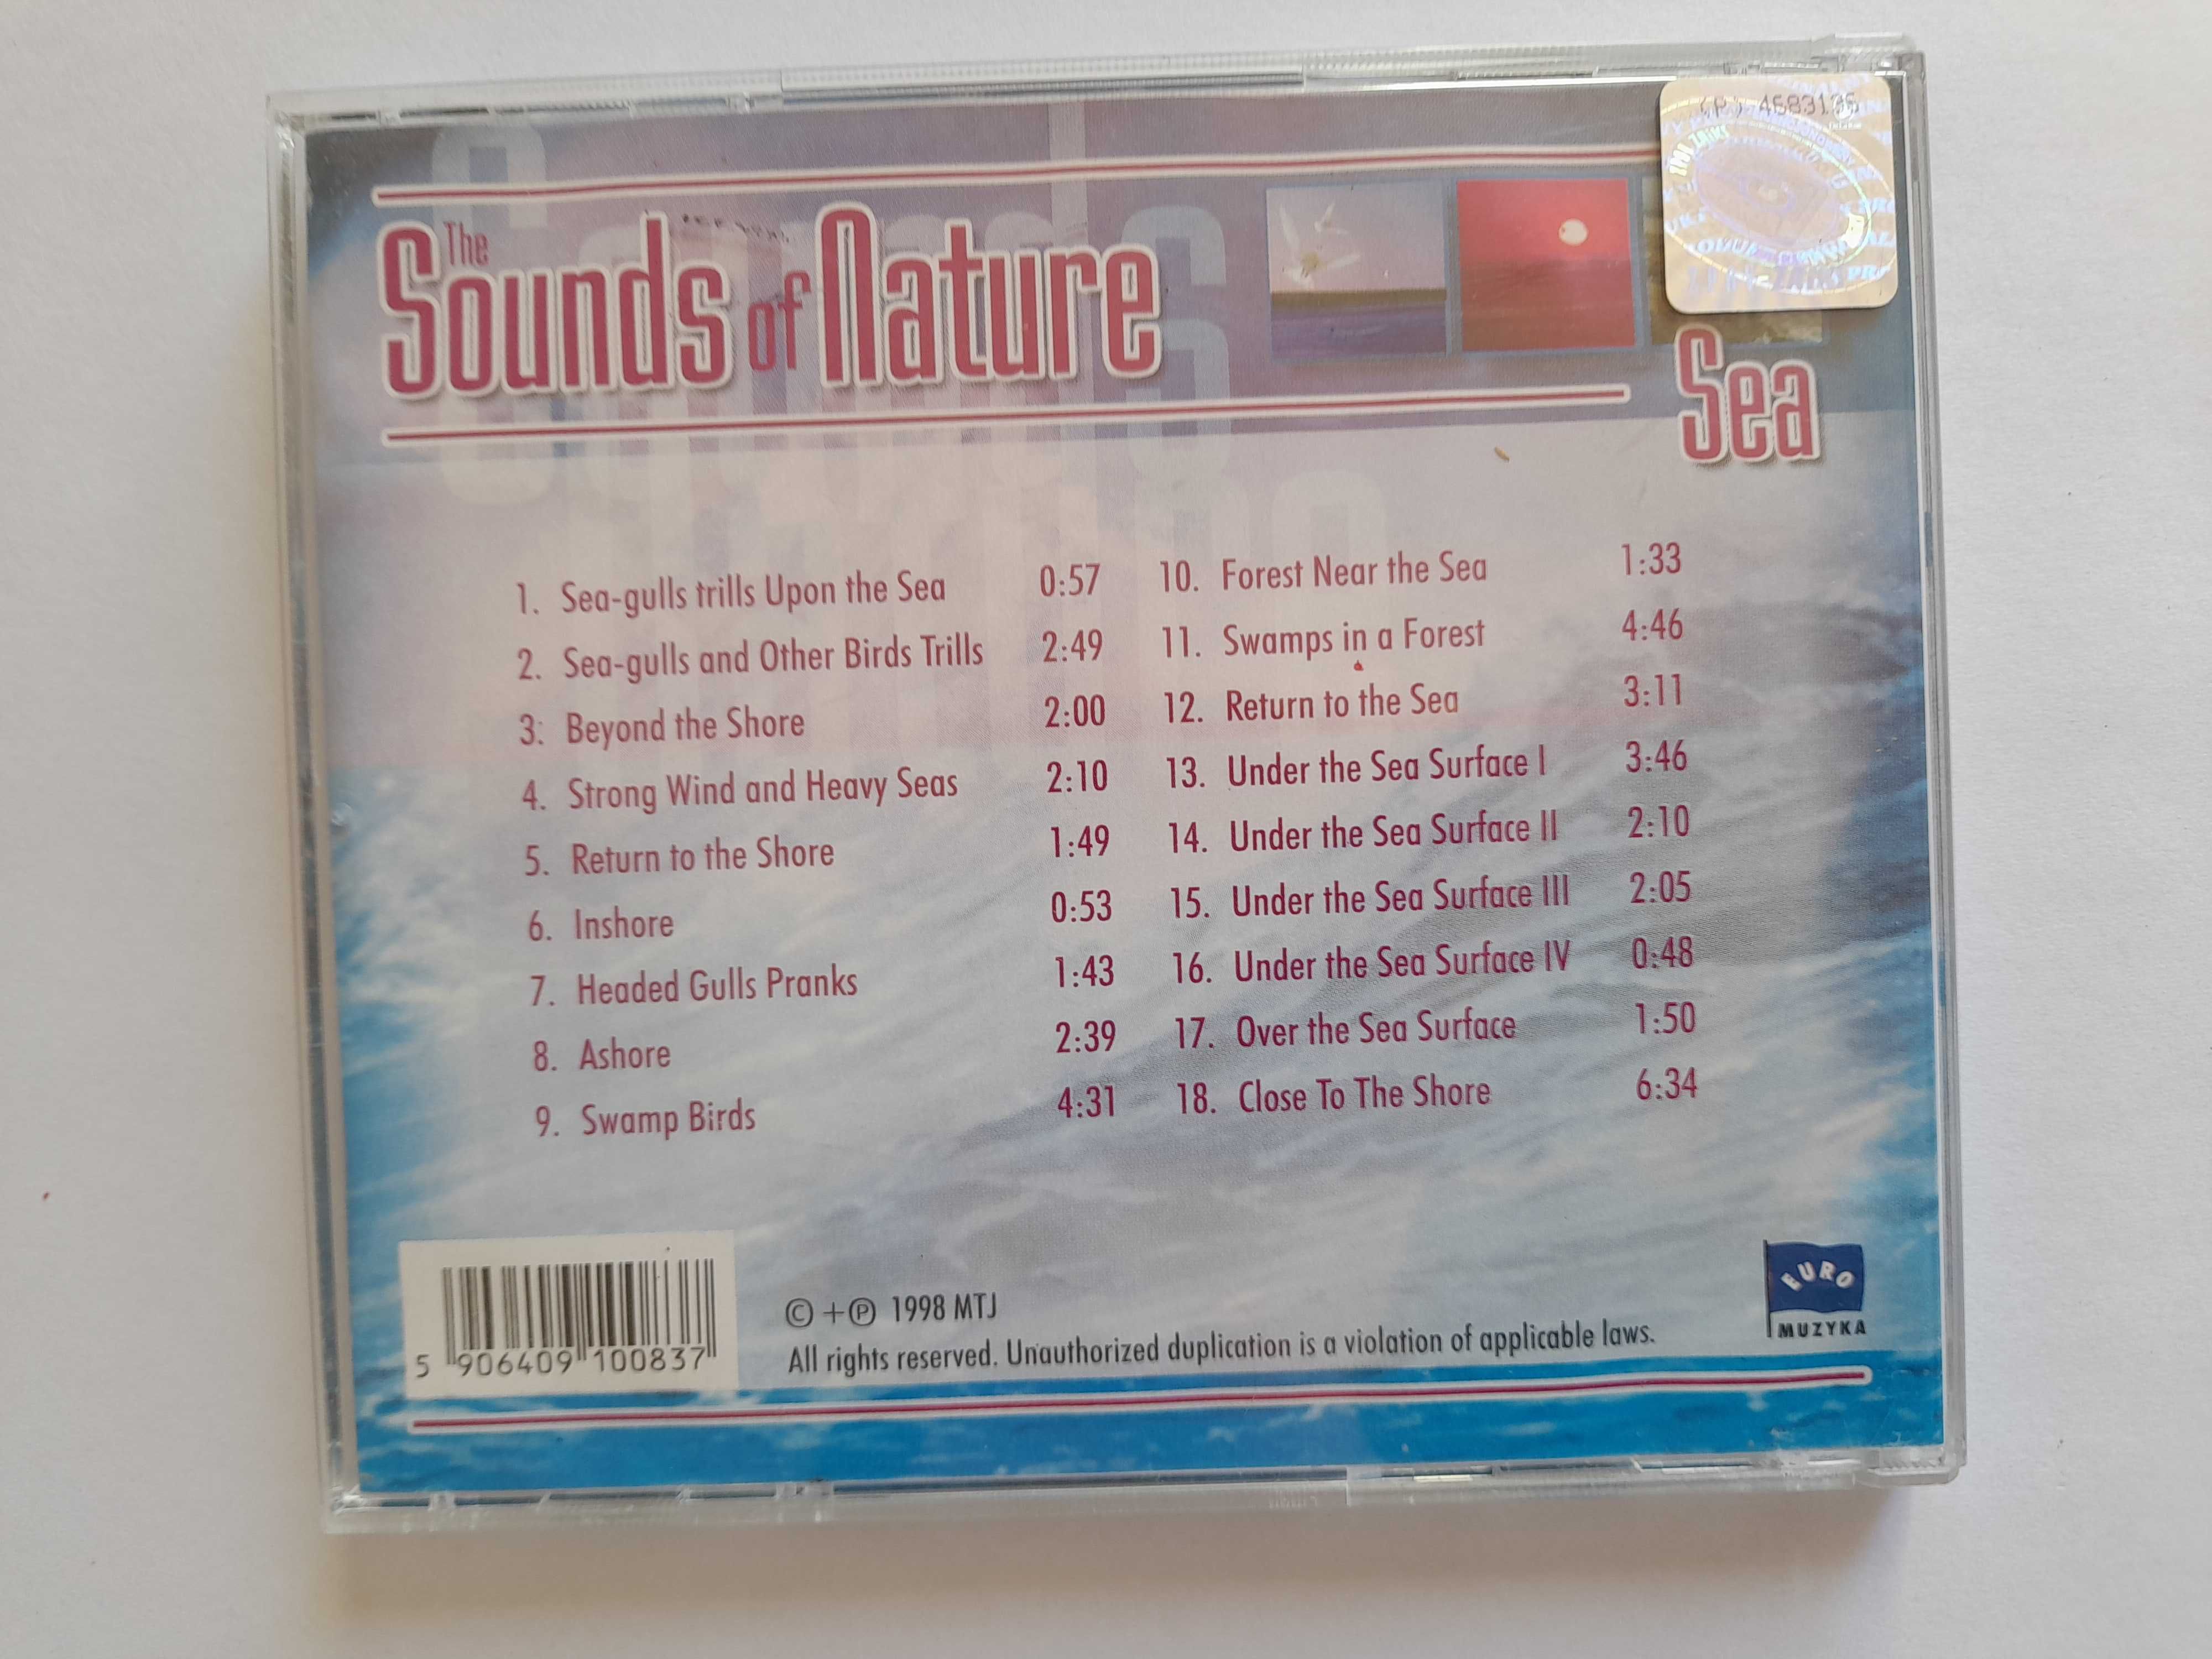 Dźwięki natury MORZE CD